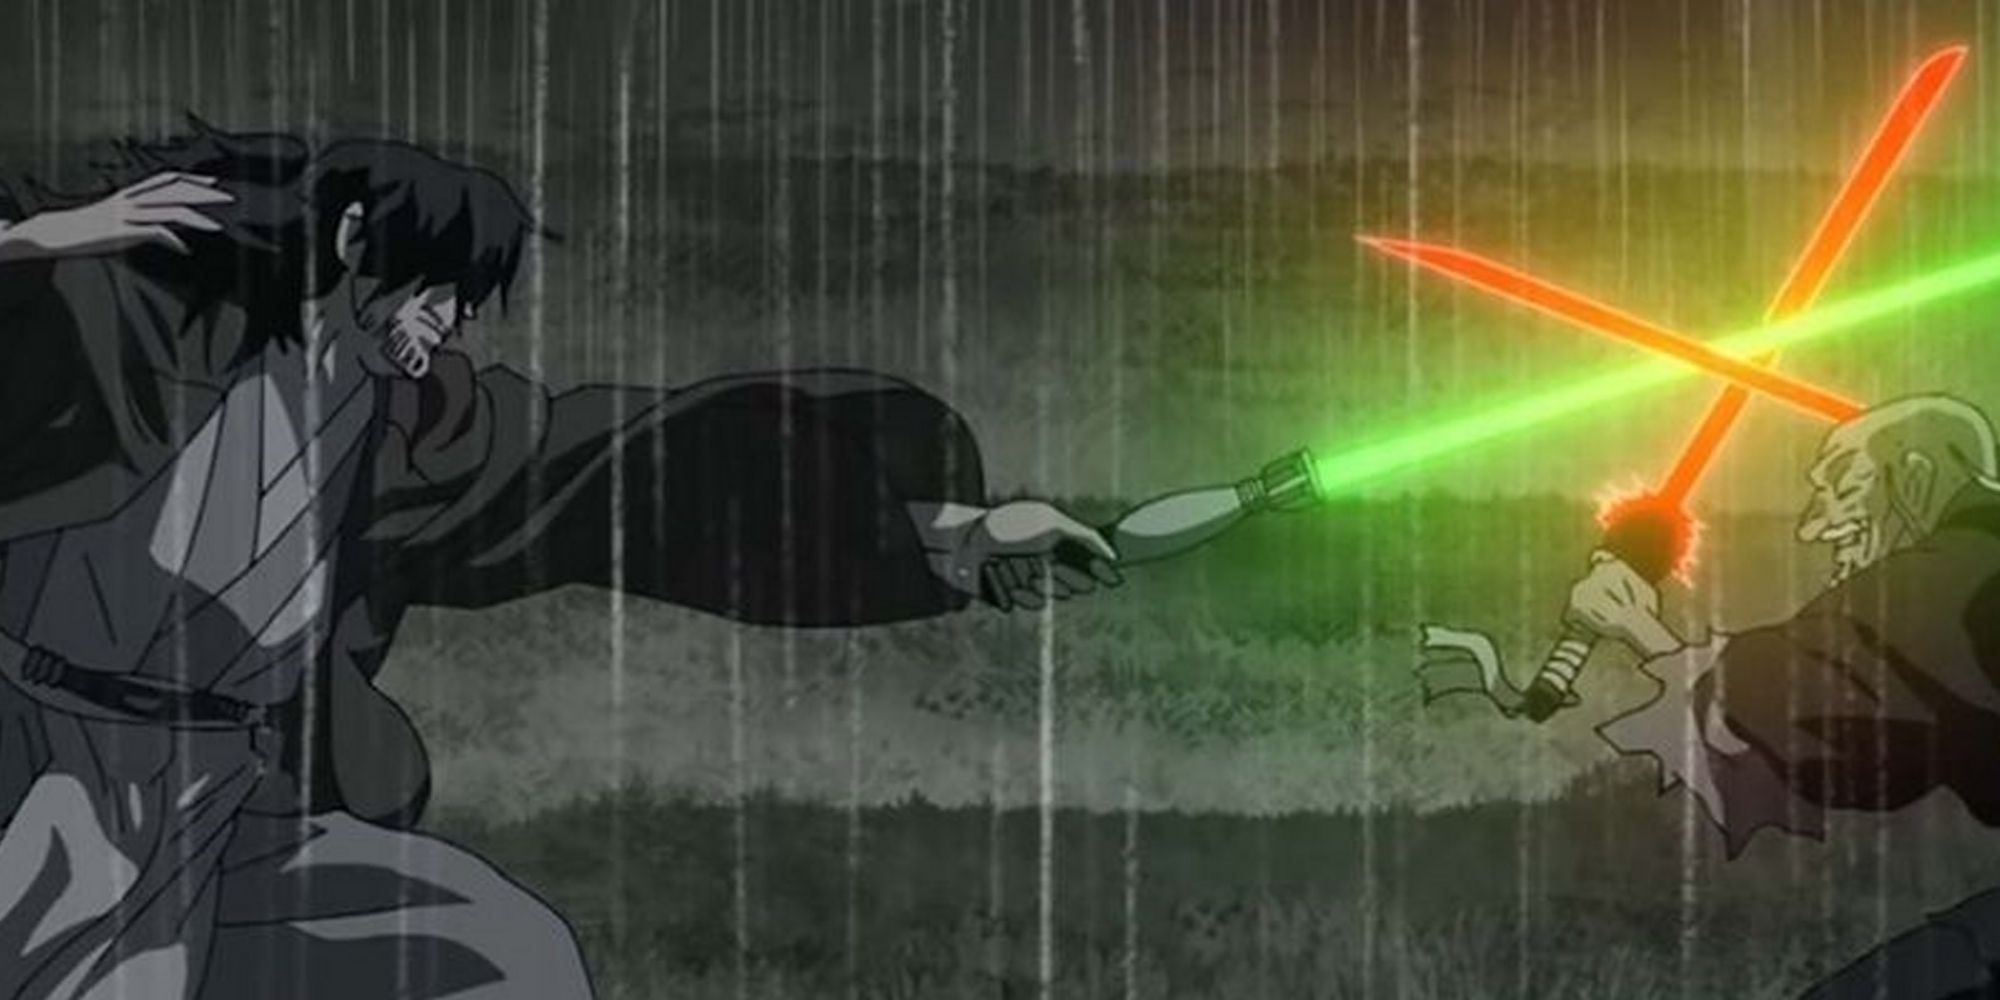 Tajin Crosser fighting The Elder in the rain in 'Star Wars: Visions' 